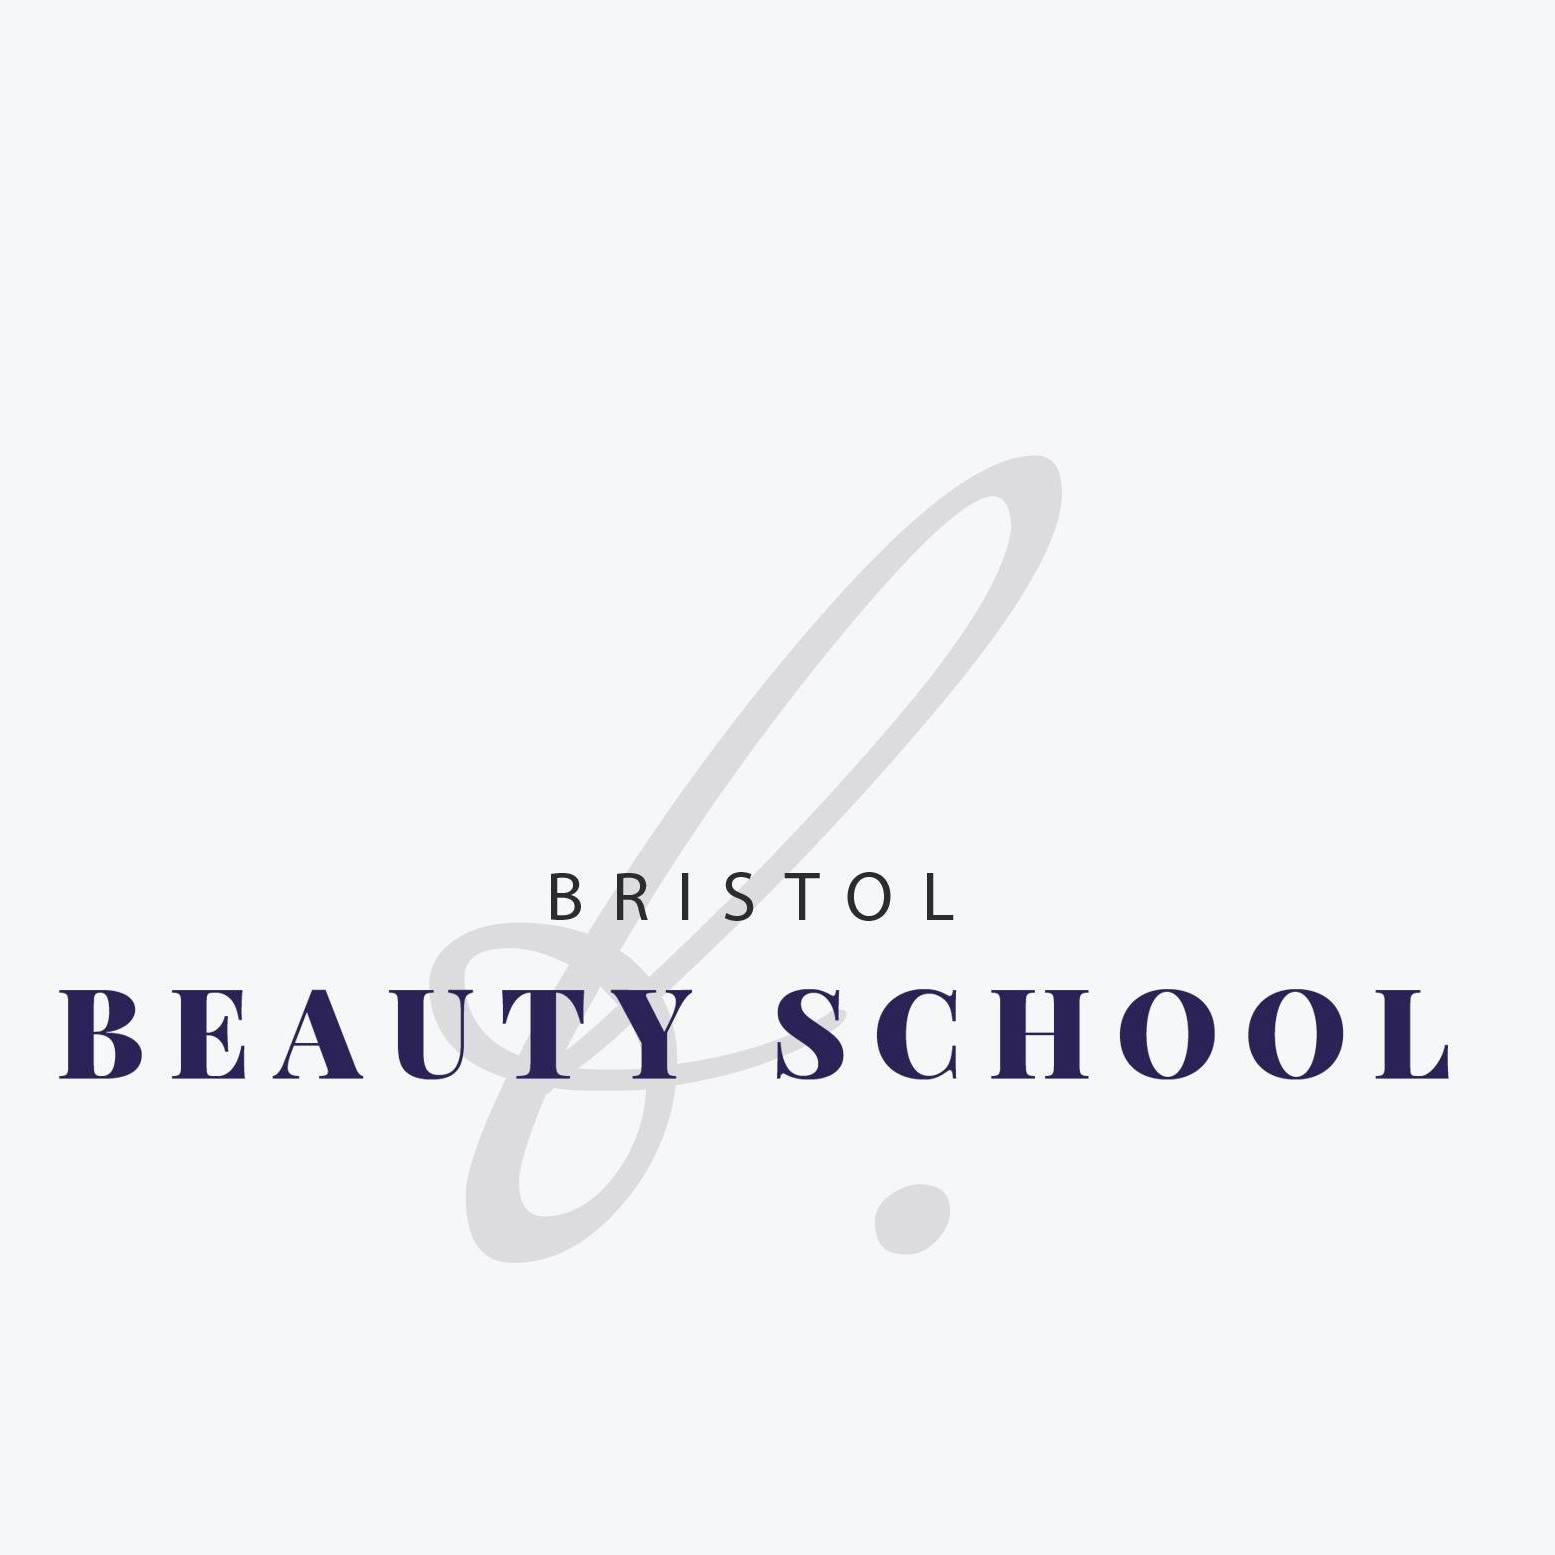 Bristol Beauty School Logo